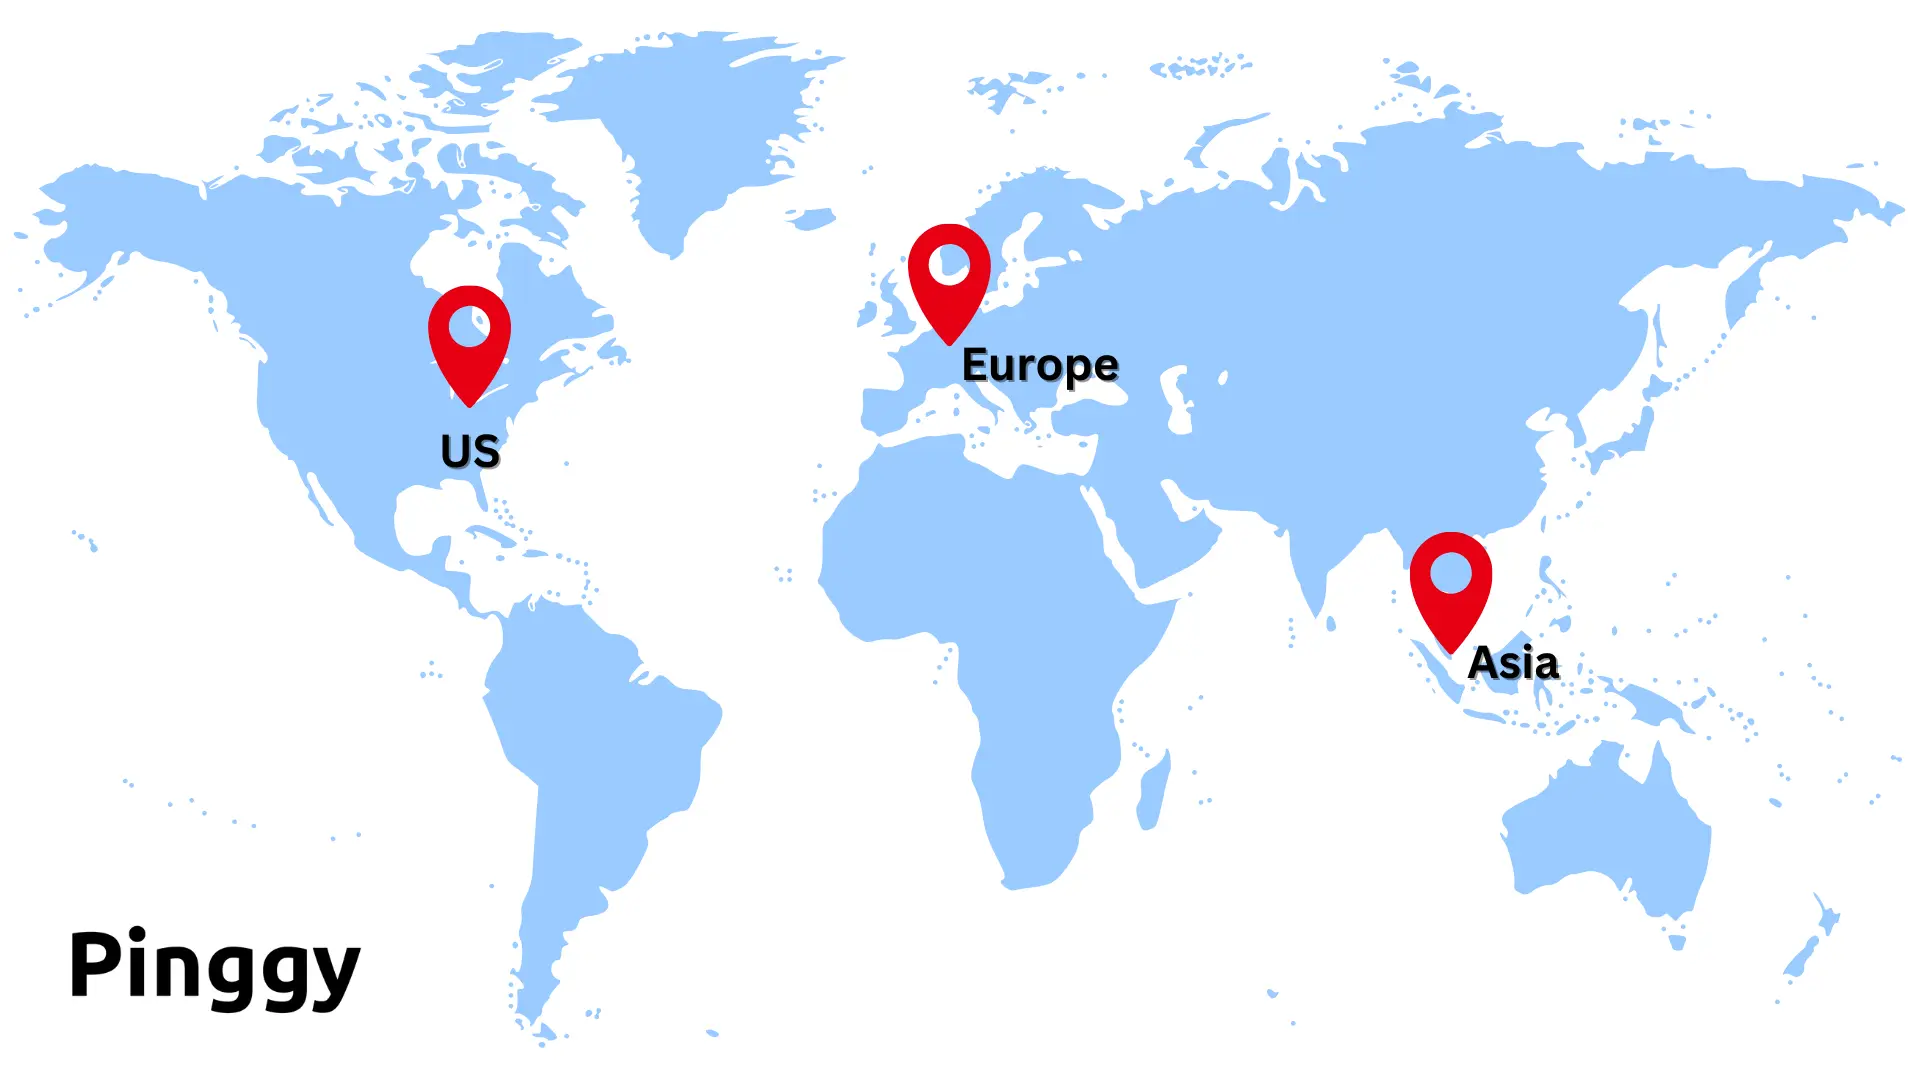 Pinggy servers across the world